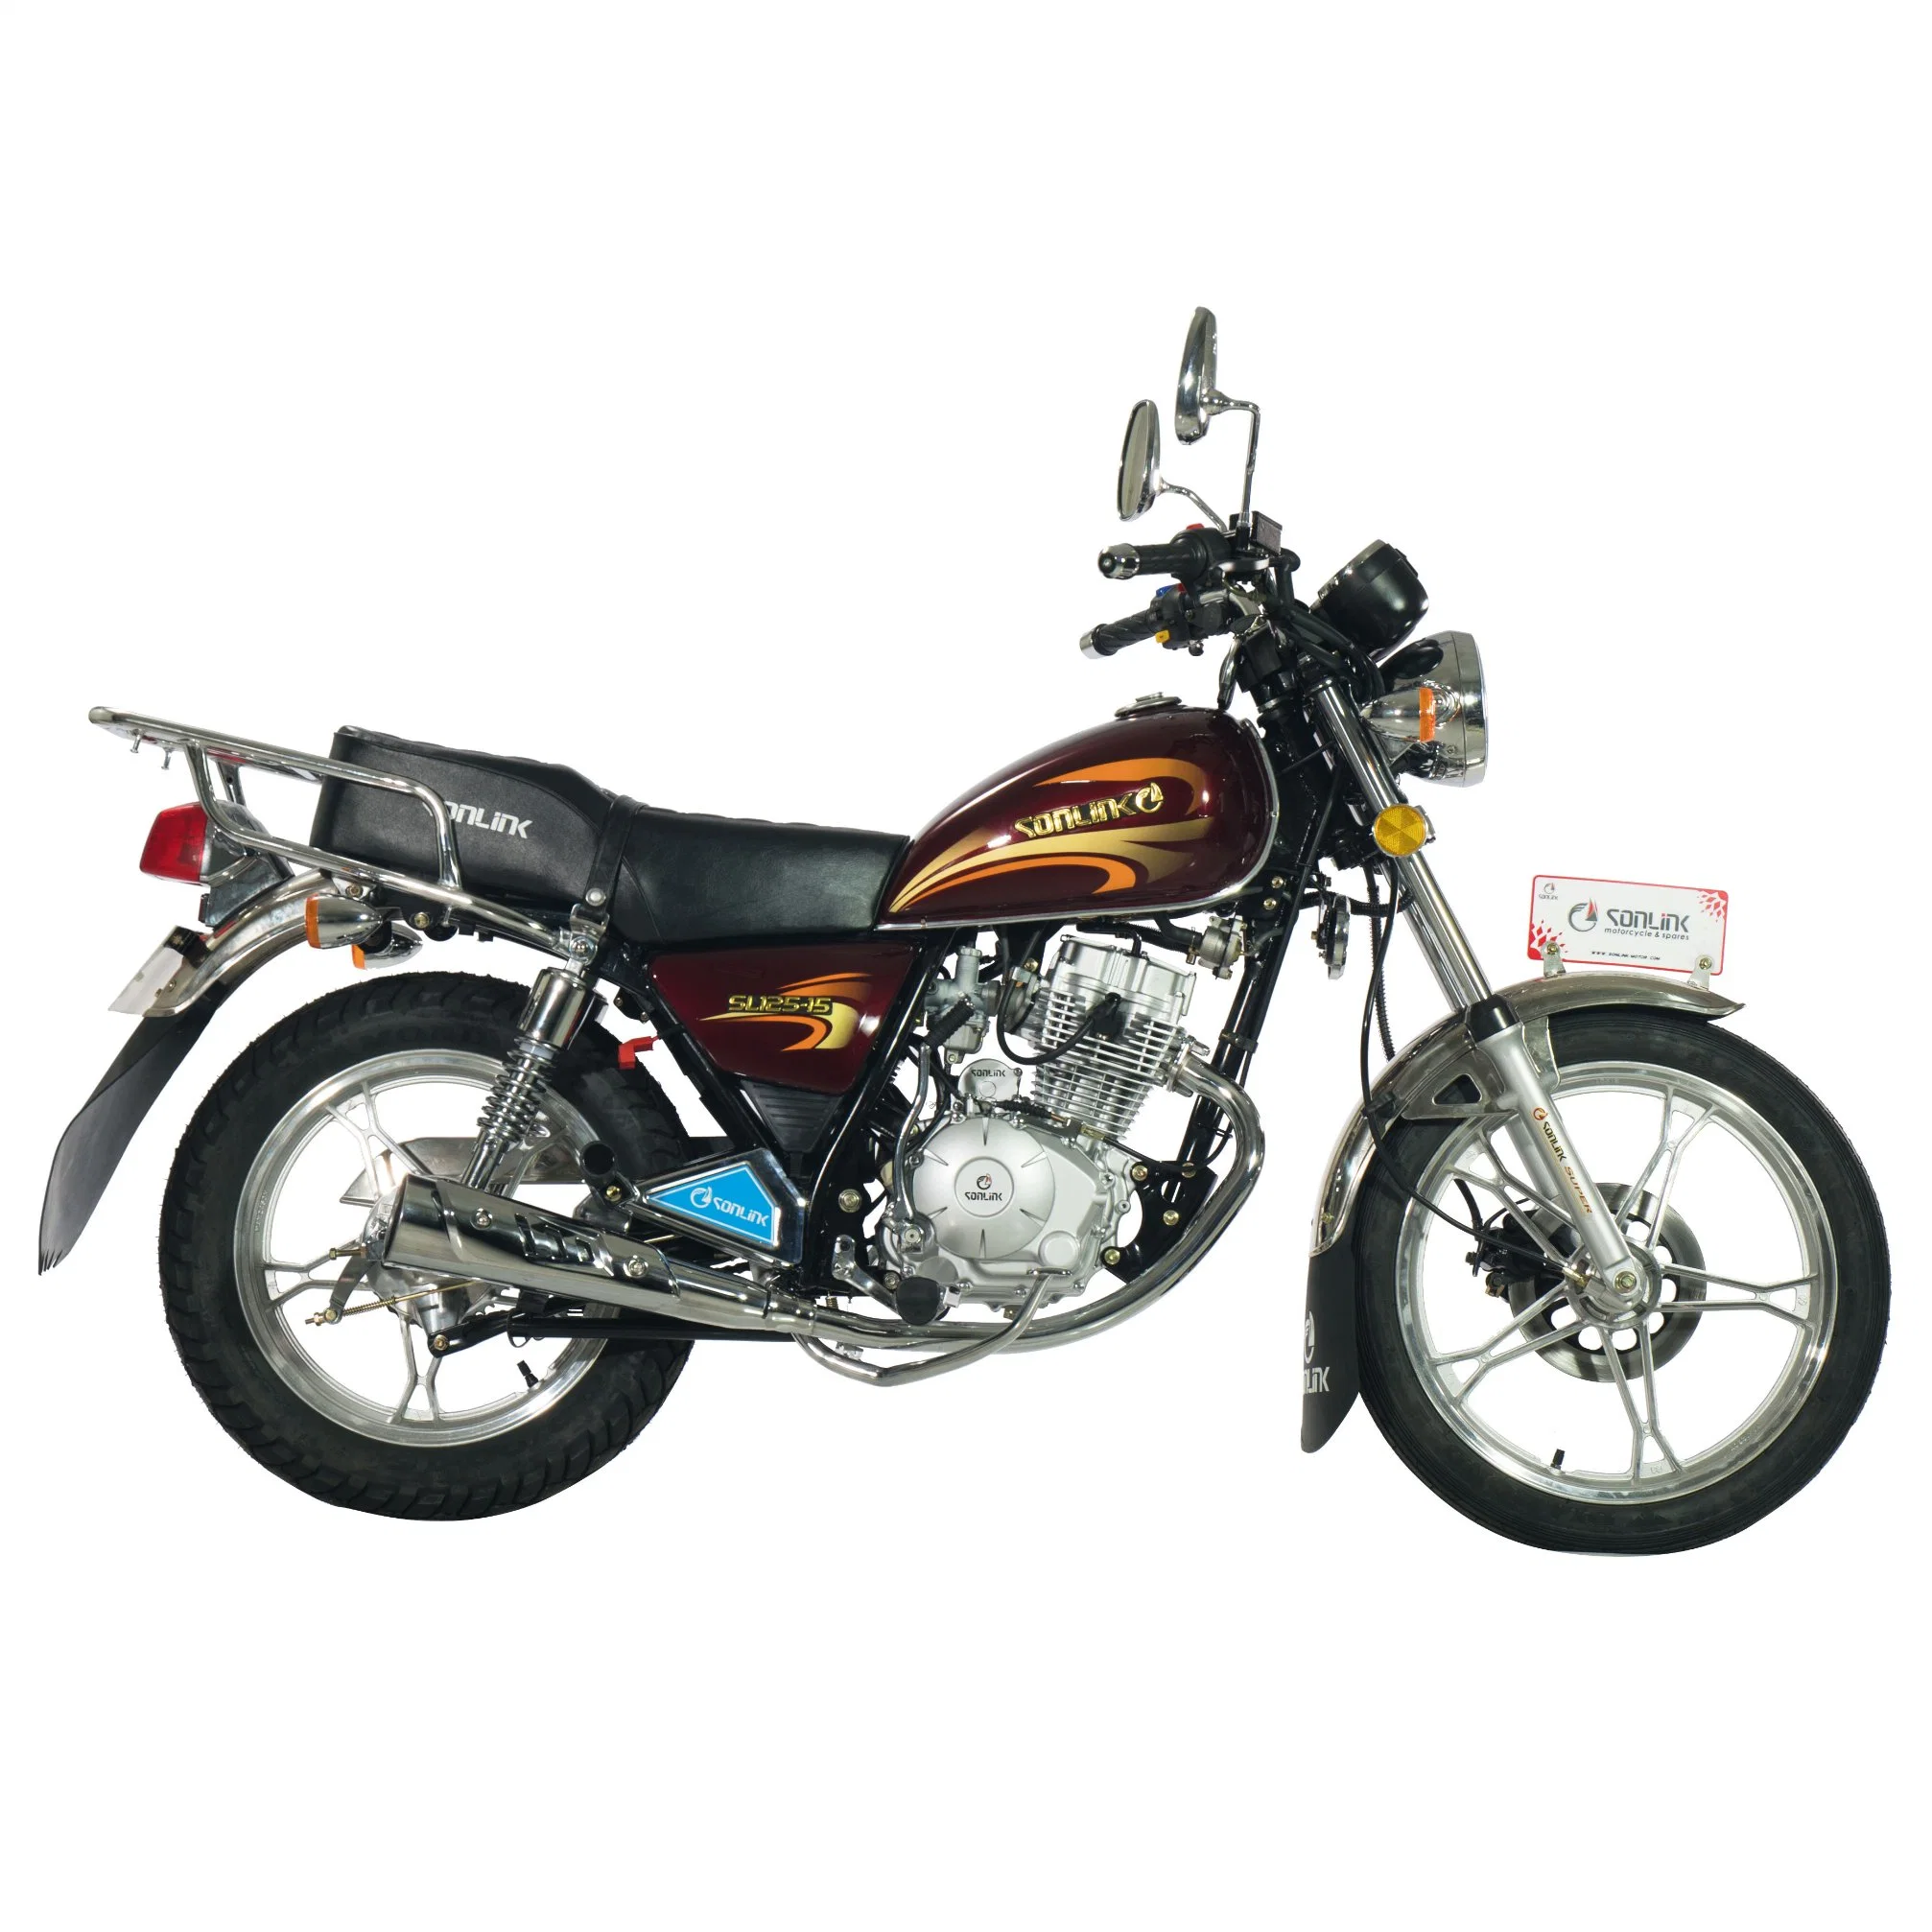 Fábrica de motos chinas baratas Venta directa de combustible de 125cc motocicleta prudente/moto/Motor